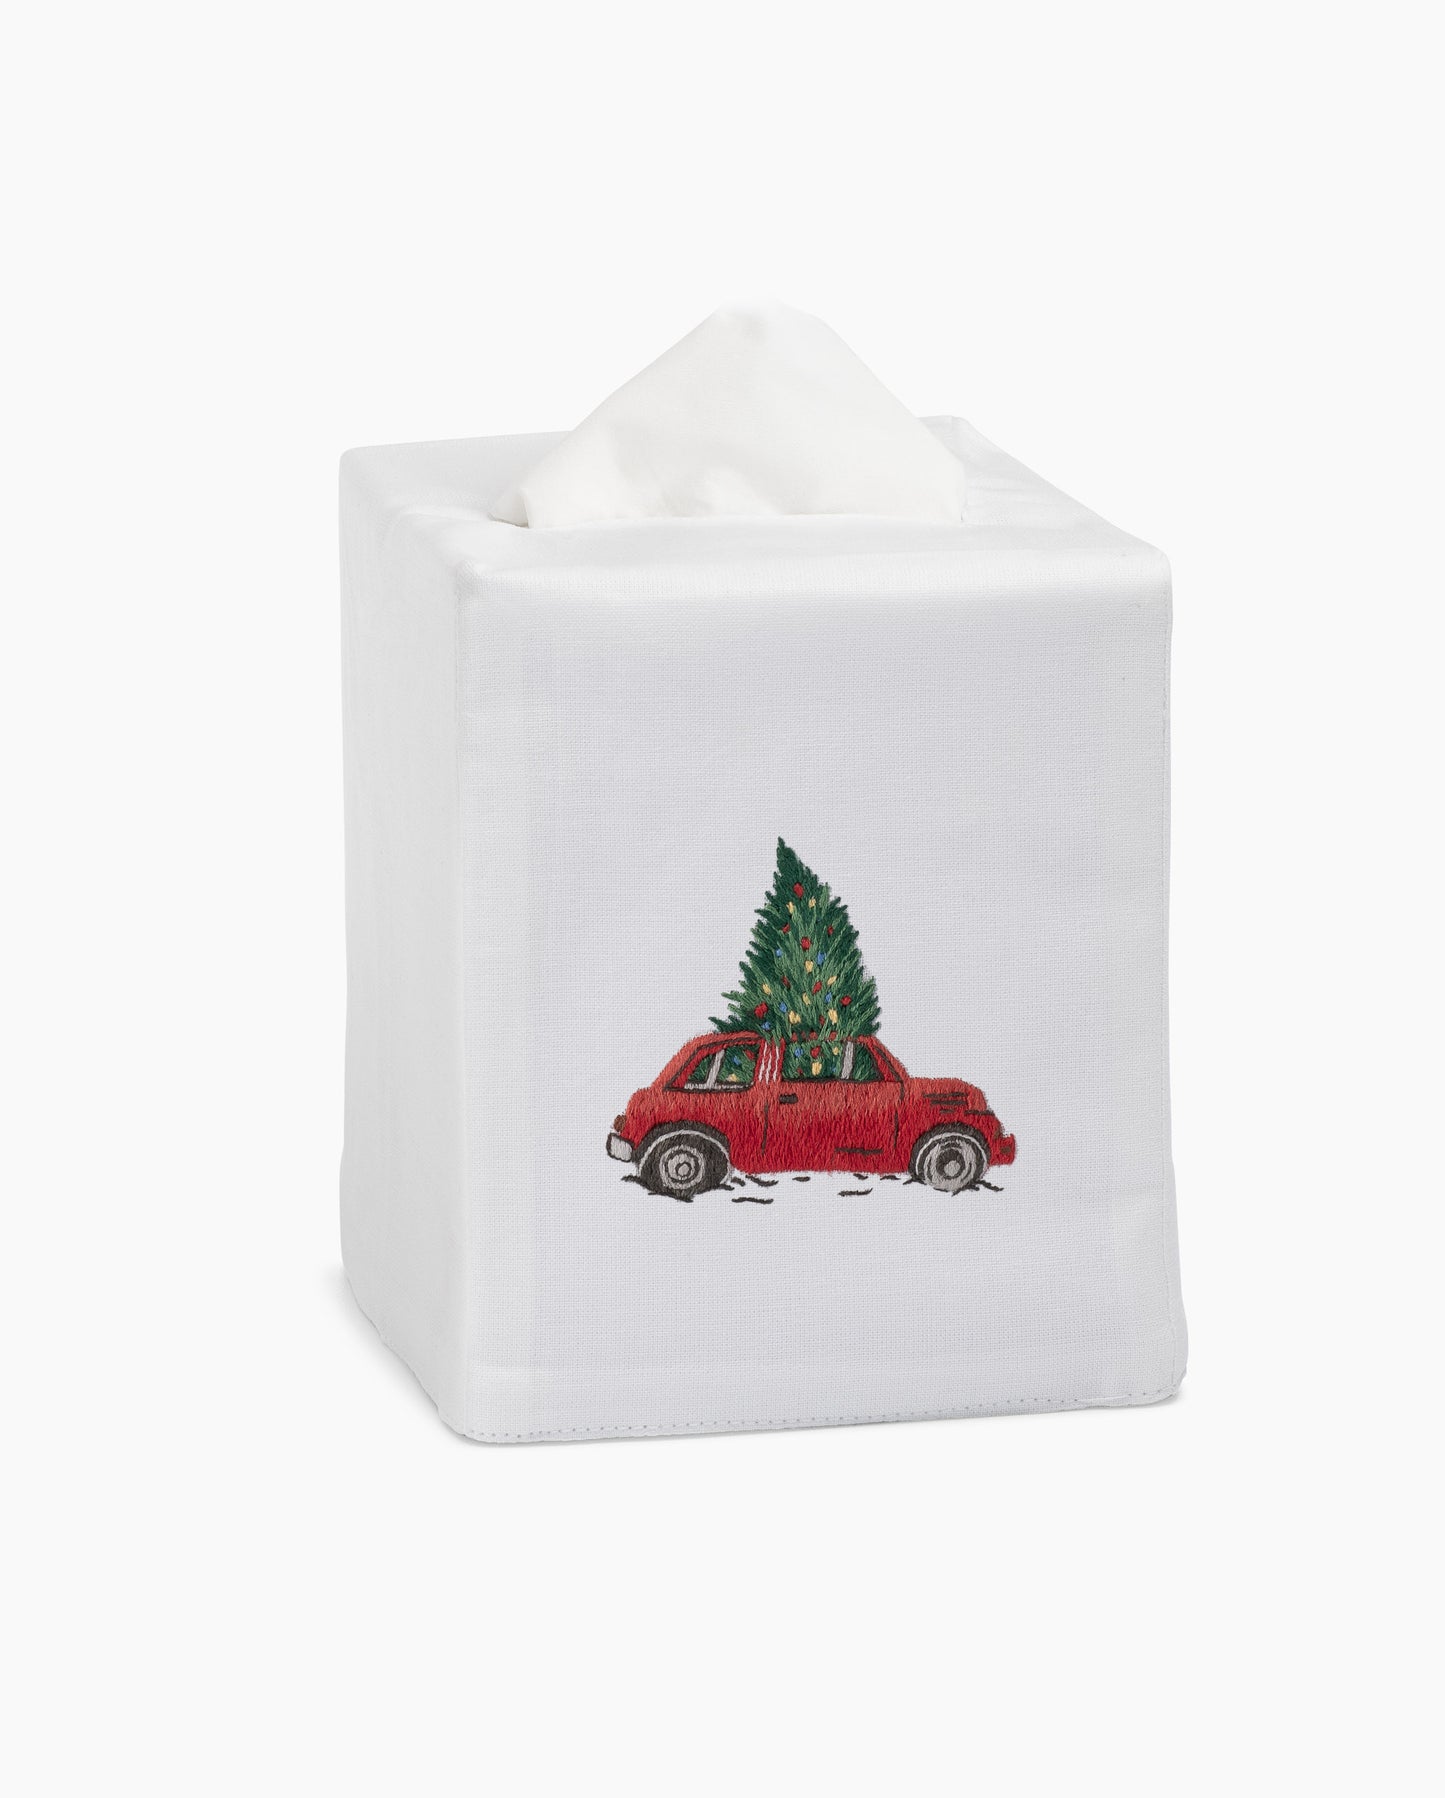 Christmas Tree Car Tissue Box Cover